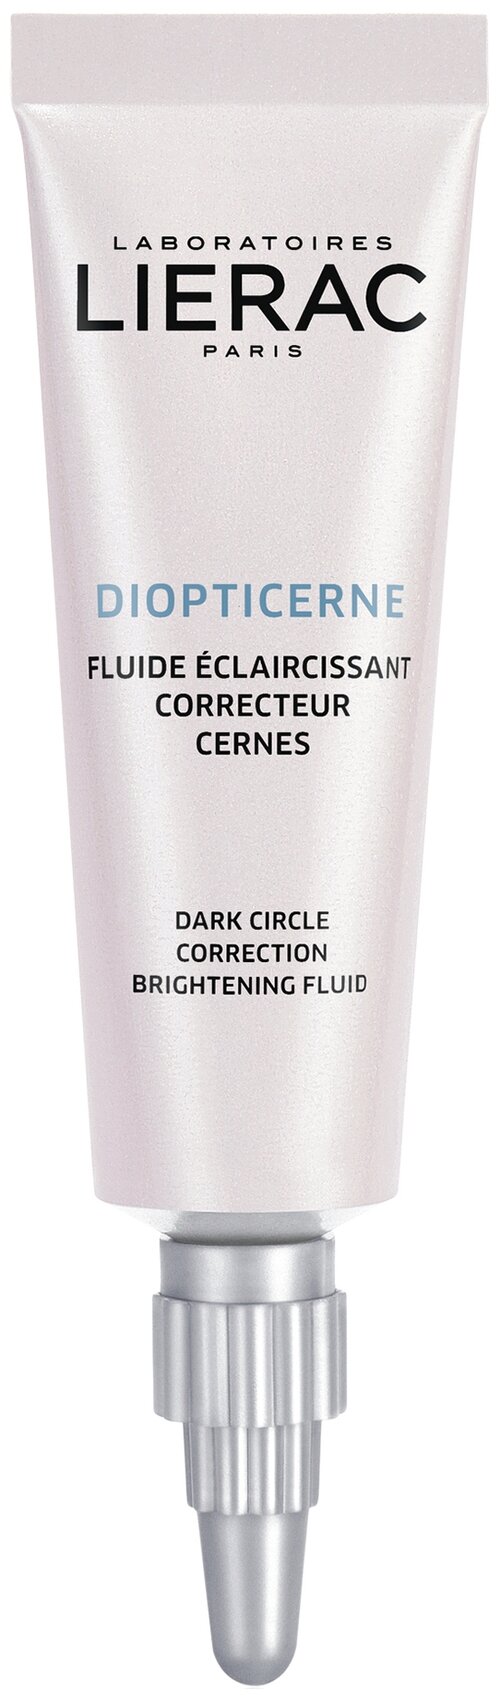 Lierac флюид осветляющий от темных кругов под глазами Diopticerne Fluide Éclaircissant Correcteur Cernes, 15 мл, 15 г